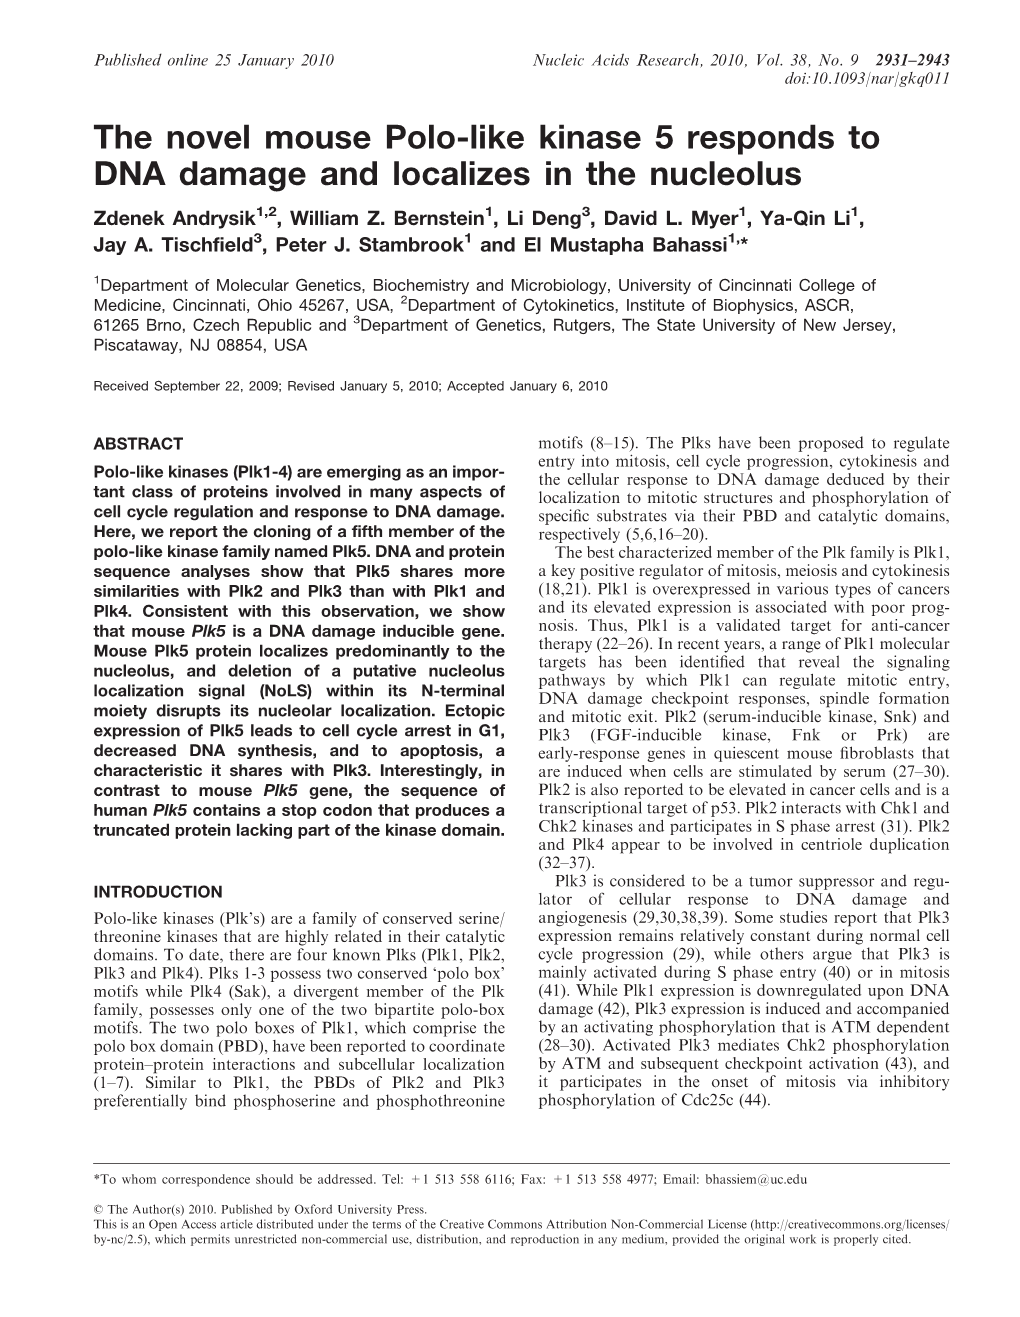 The Novel Mouse Polo-Like Kinase 5 Responds to DNA Damage and Localizes in the Nucleolus Zdenek Andrysik1,2, William Z